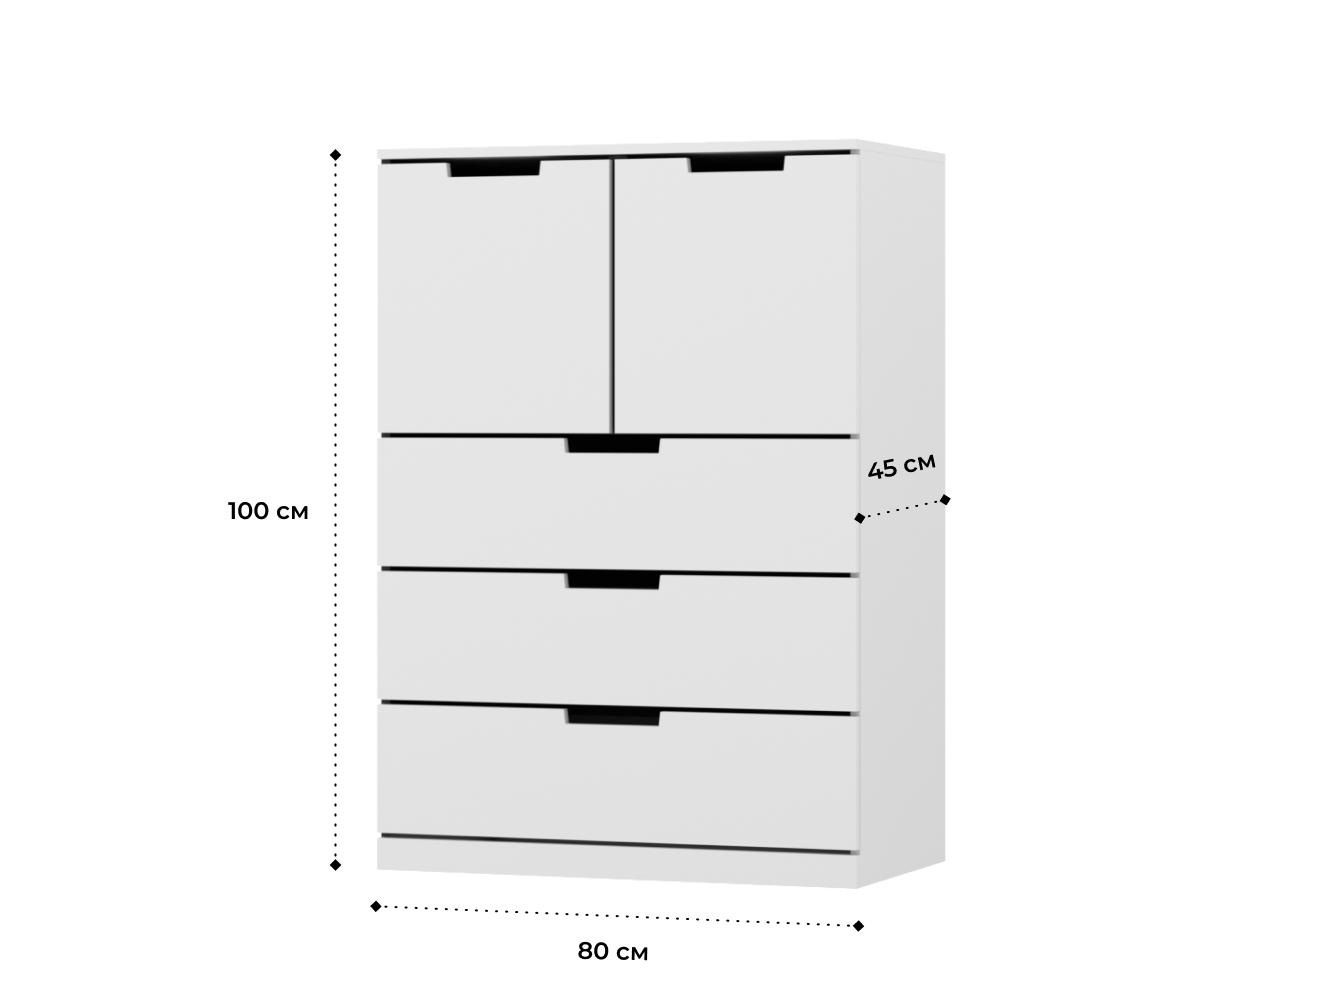 Изображение товара Комод Нордли 40 white ИКЕА (IKEA), 80x45x100 см на сайте adeta.ru